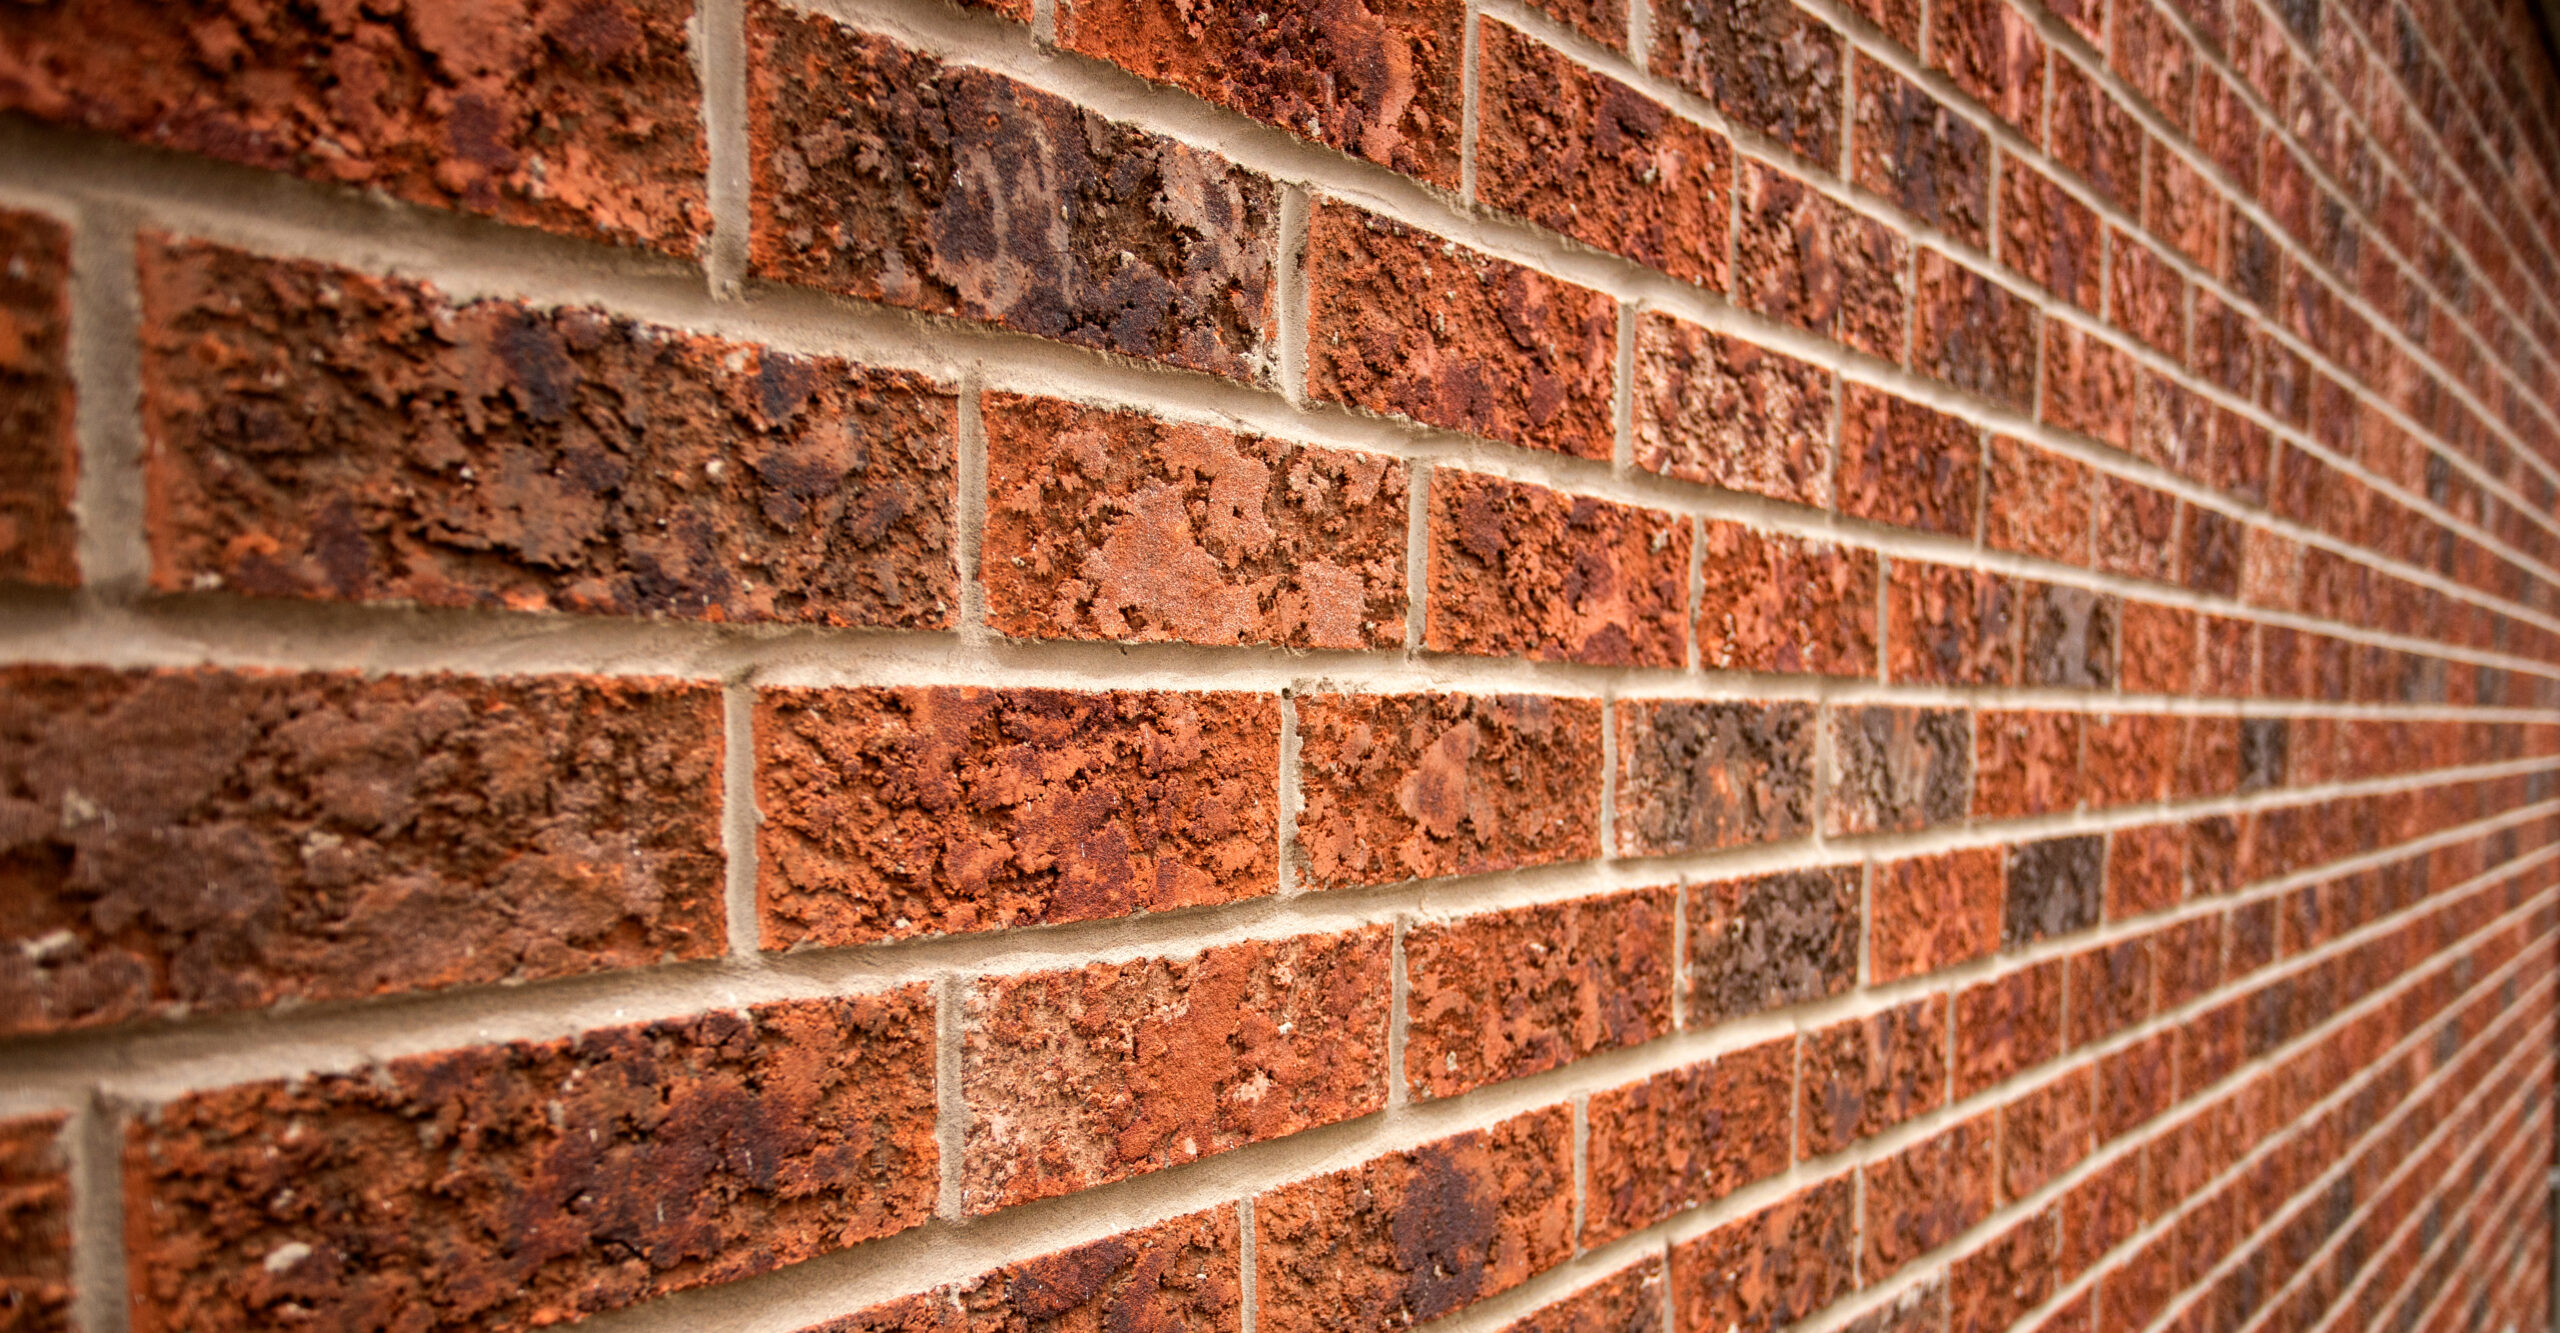 Excel Restoration Ltd | Stone & Brickwork Restoration | Concrete Repairs | Render Repairs | Structural Repairs & Cleaning | External Decorations & Specialist Coatings